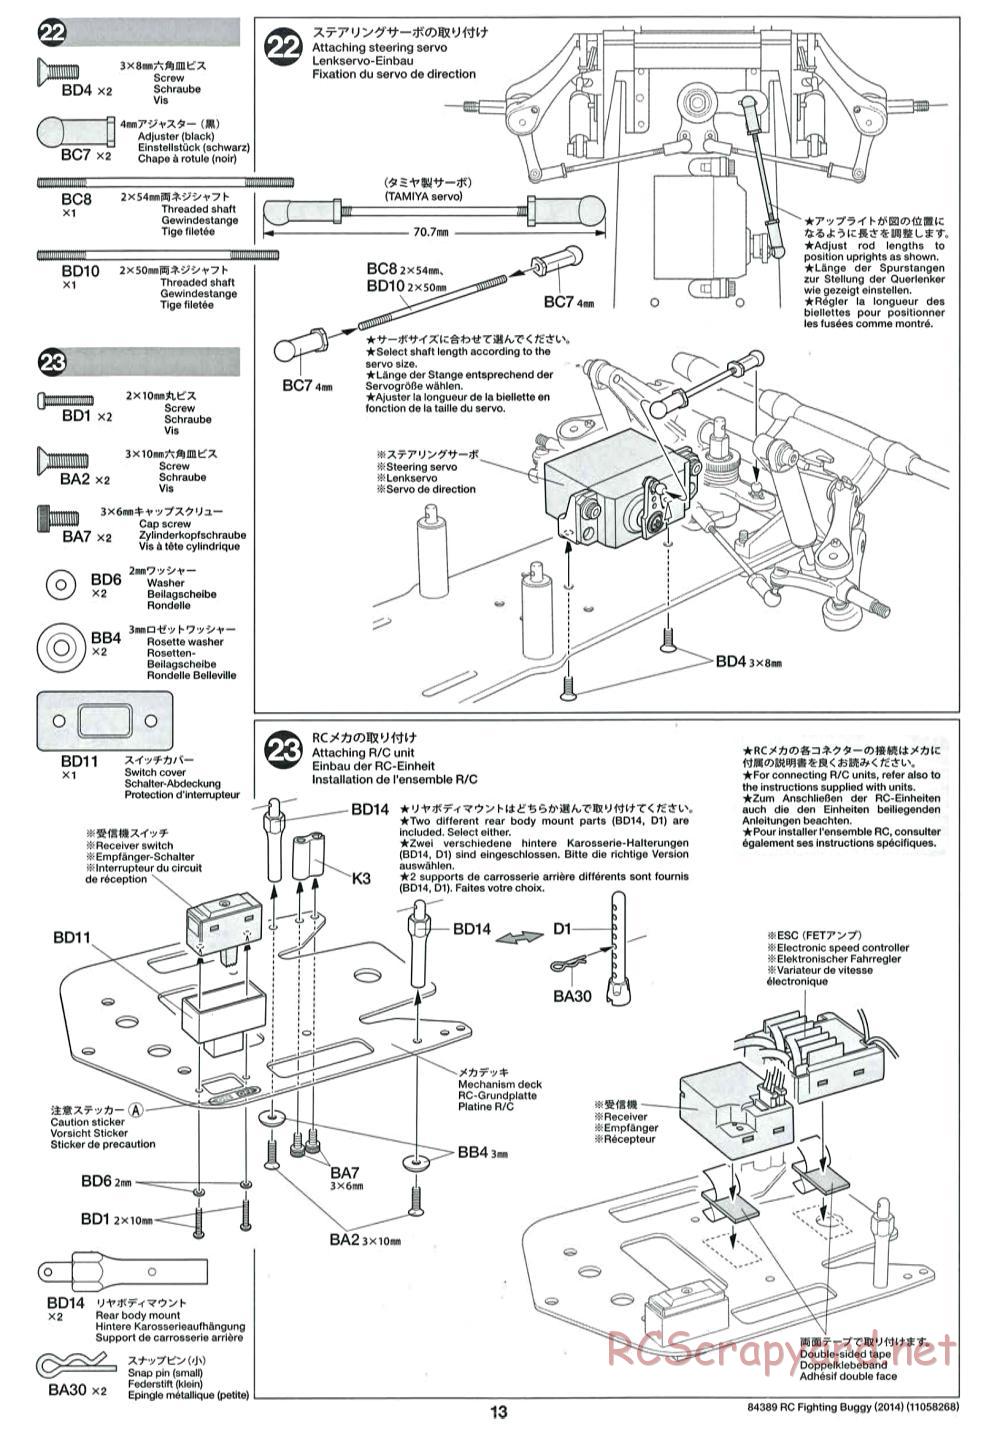 Tamiya - Fighting Buggy (2014) Chassis - Manual - Page 13